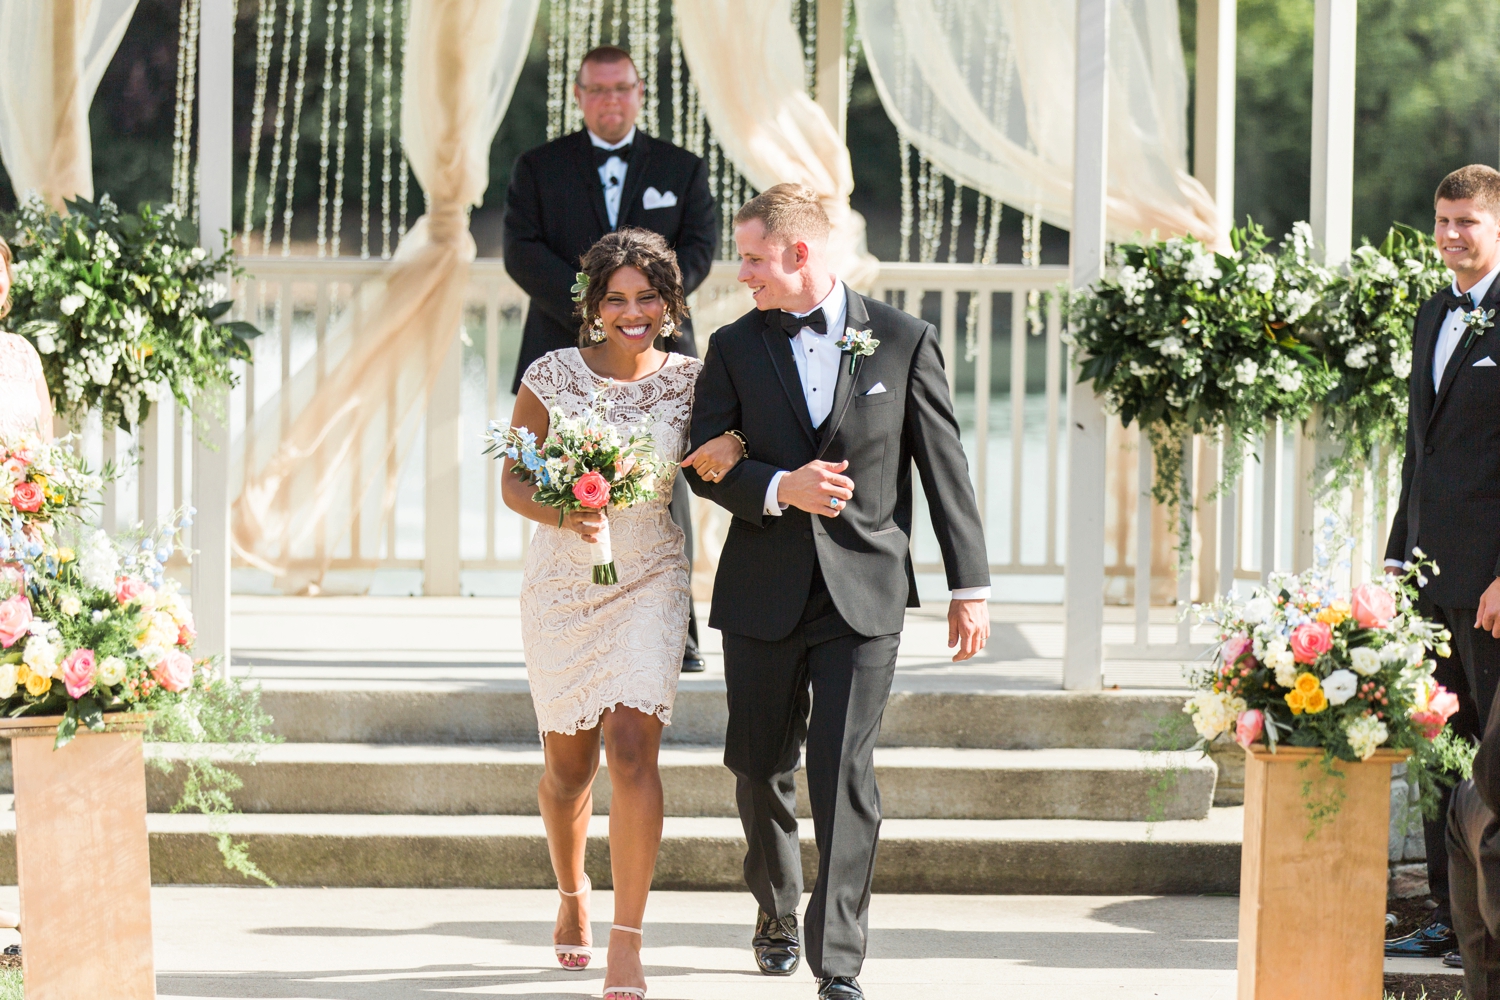 Wedding-at-The-Savannah-Center-West-Chester-Ohio-Photography-Chloe-Luka-Photography_7508.jpg